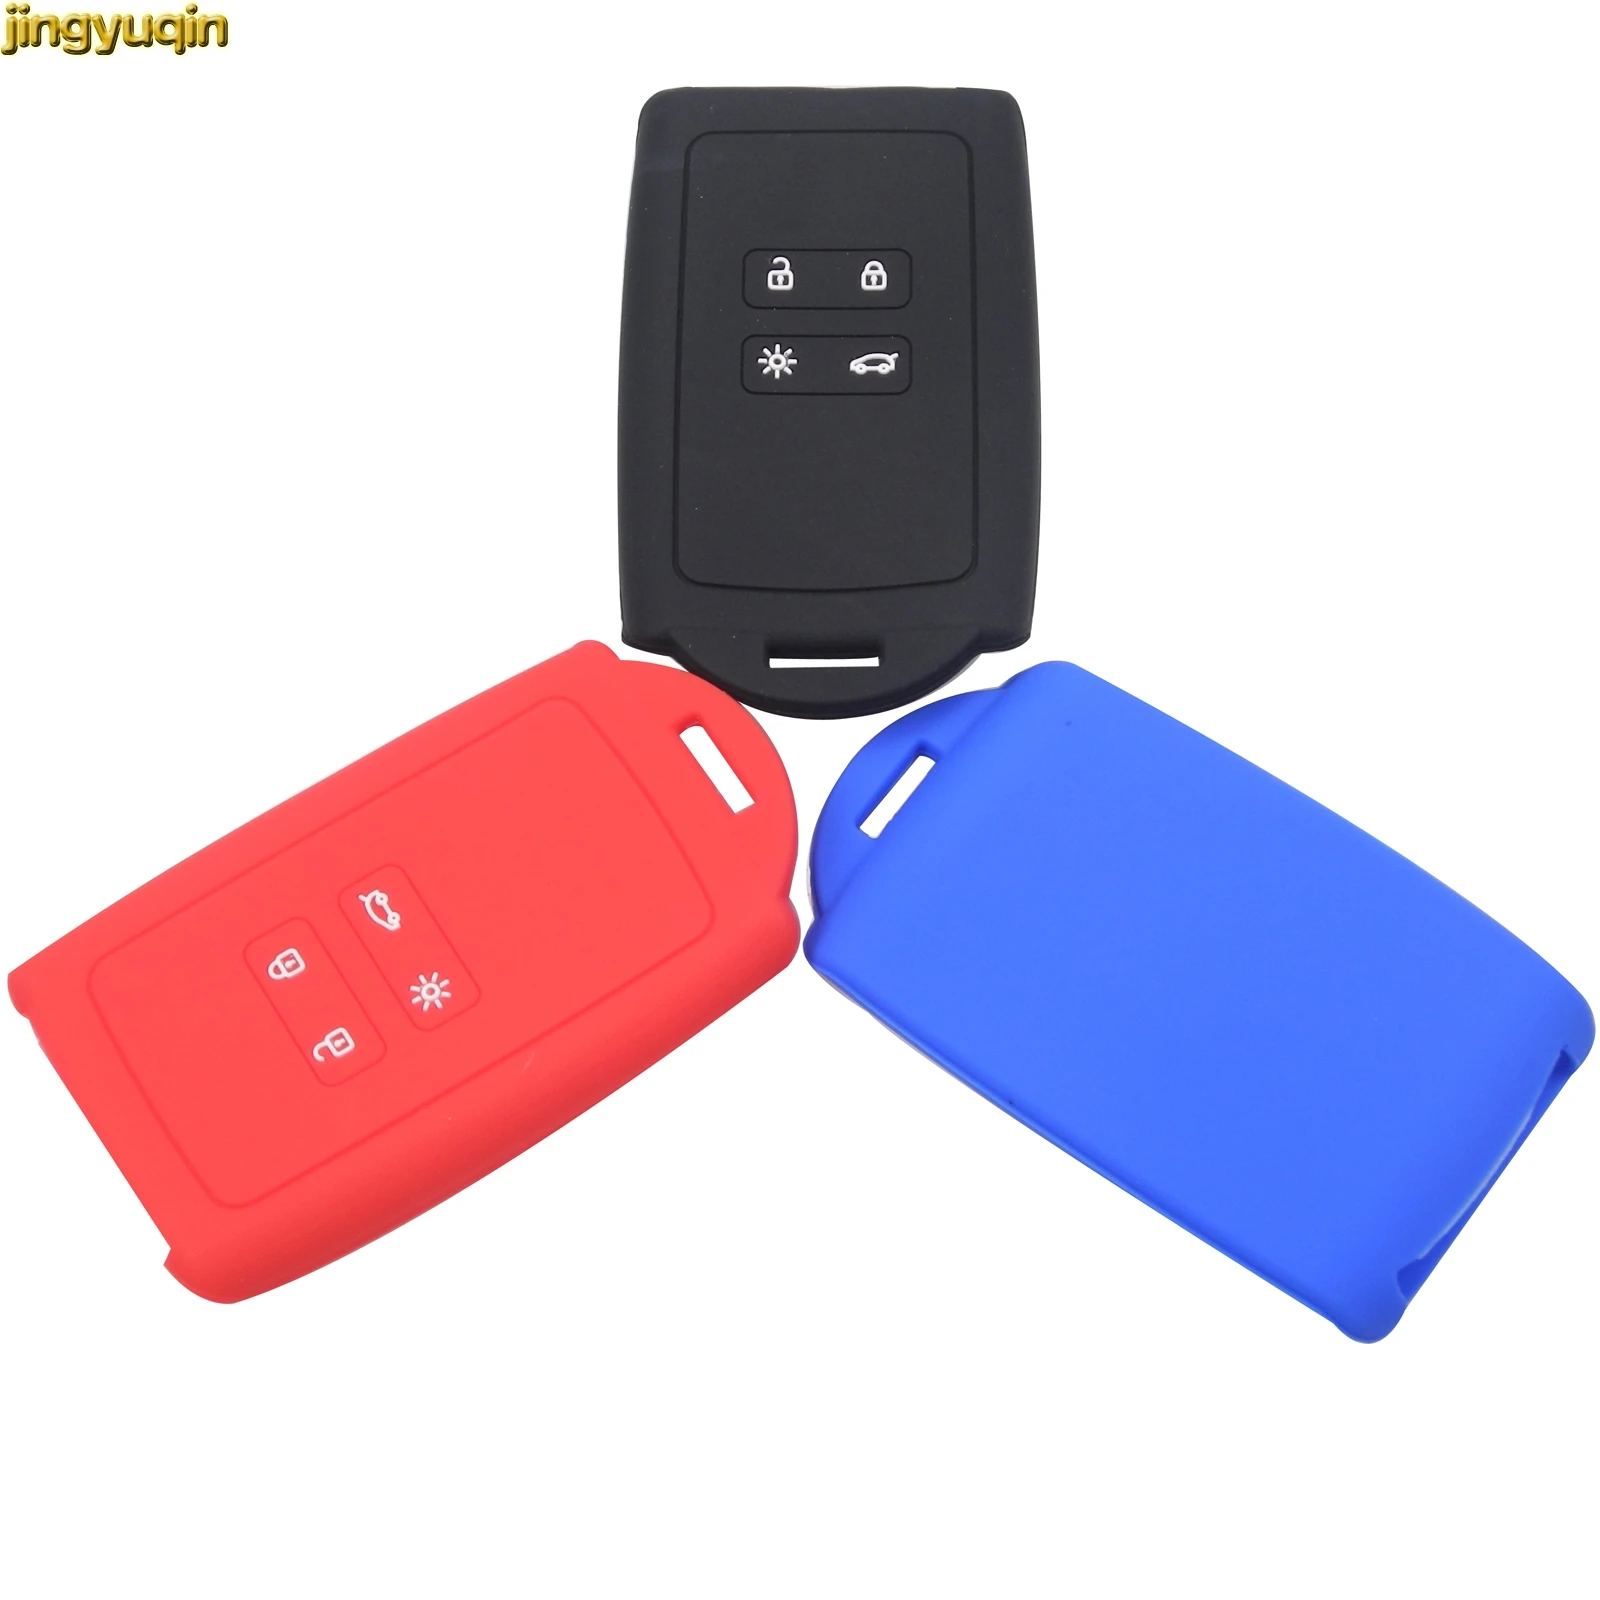 

Jingyuqin 25pcs 4 Buttons Silicone Smart Car Key Cover For Renault Koleos Kadjar 2016-2017 Remote Key Holder Protector Case